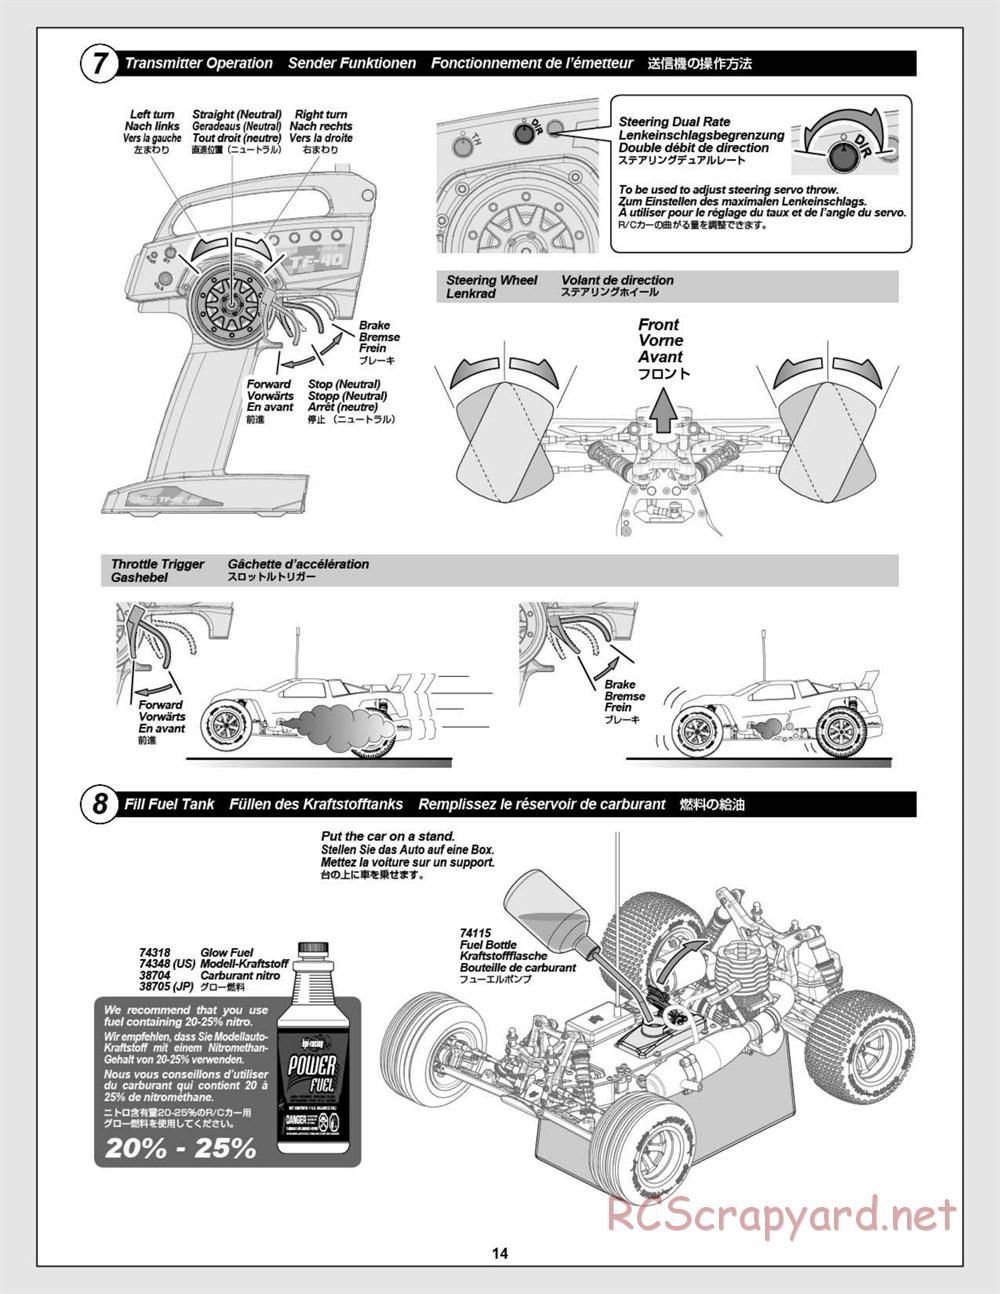 HPI - Firestorm 10T - Manual - Page 14